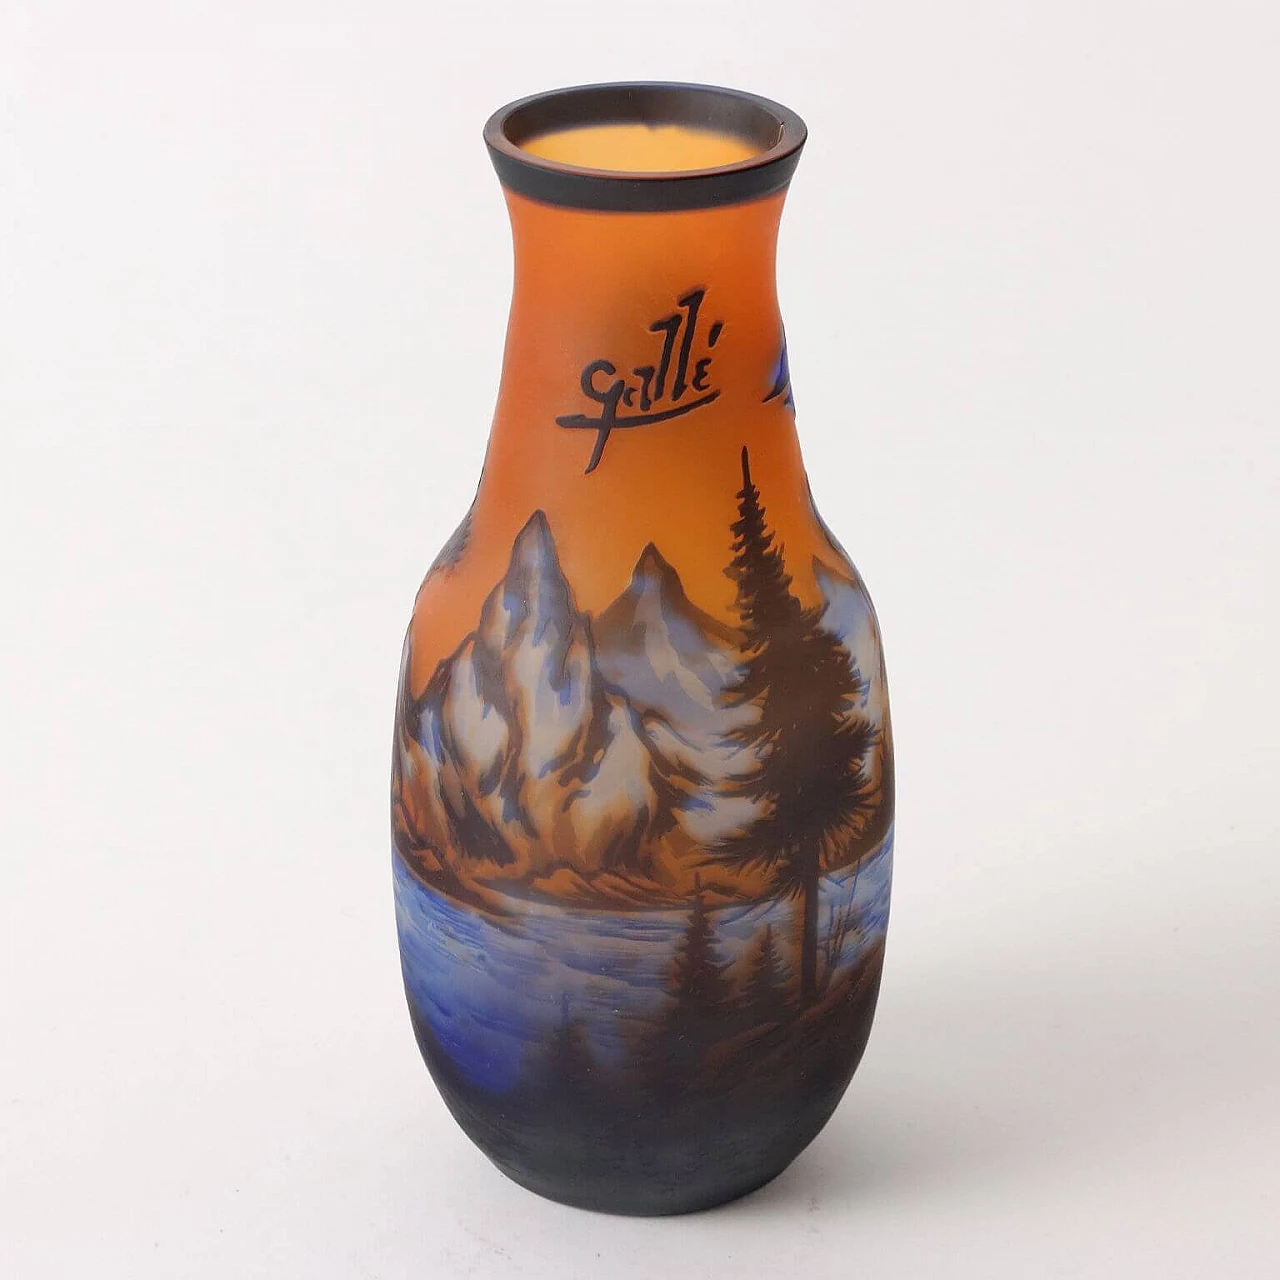 Polychrome glass vase by Gallé 3